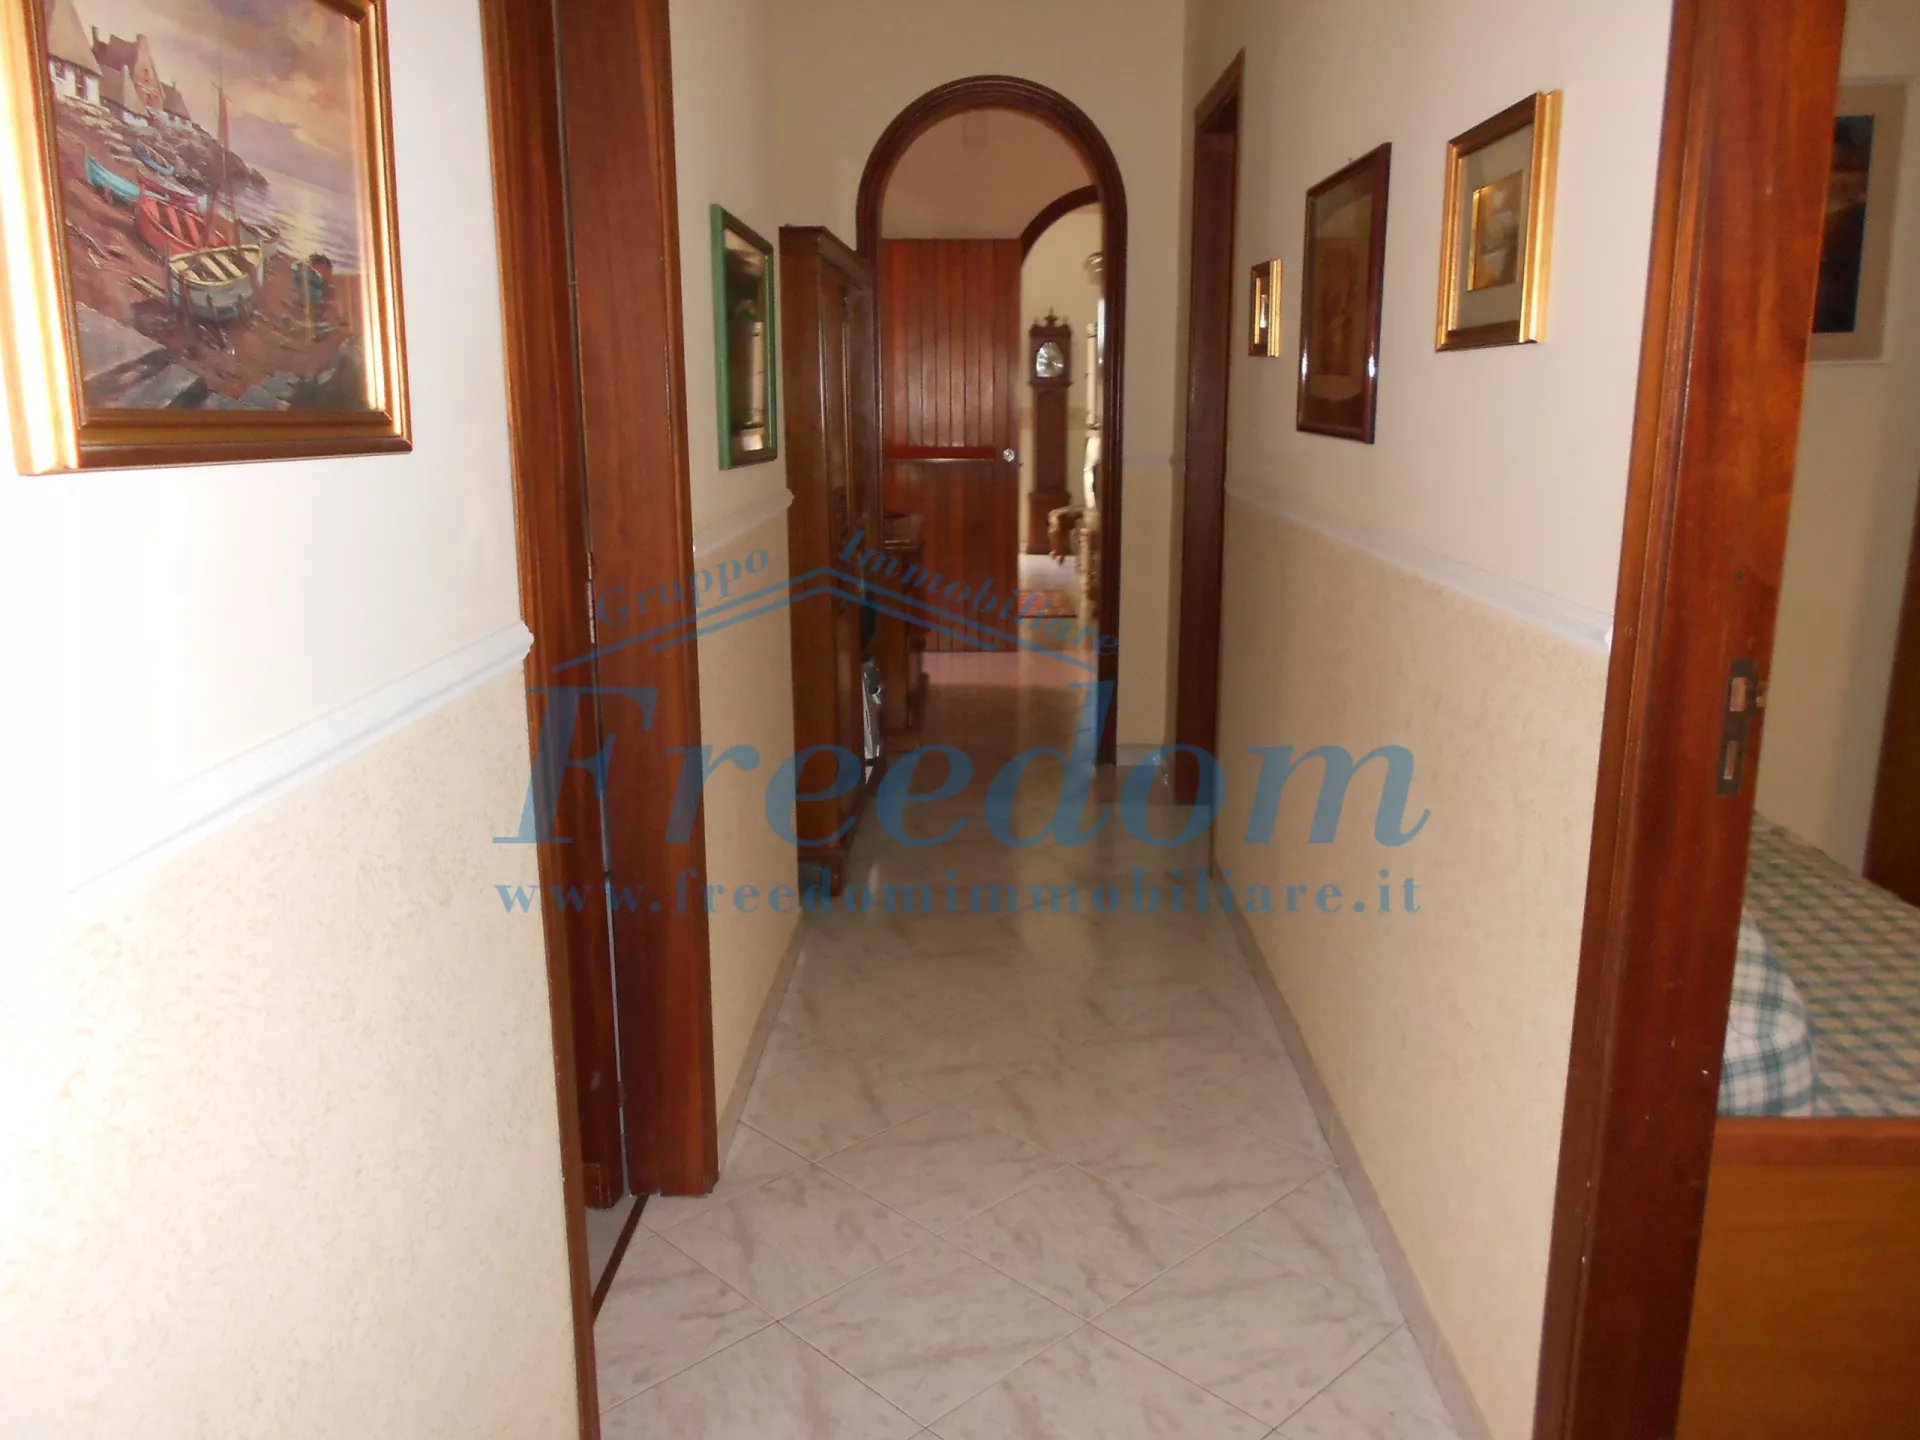 Immagine per Appartamento in vendita a Catania via Gela 24